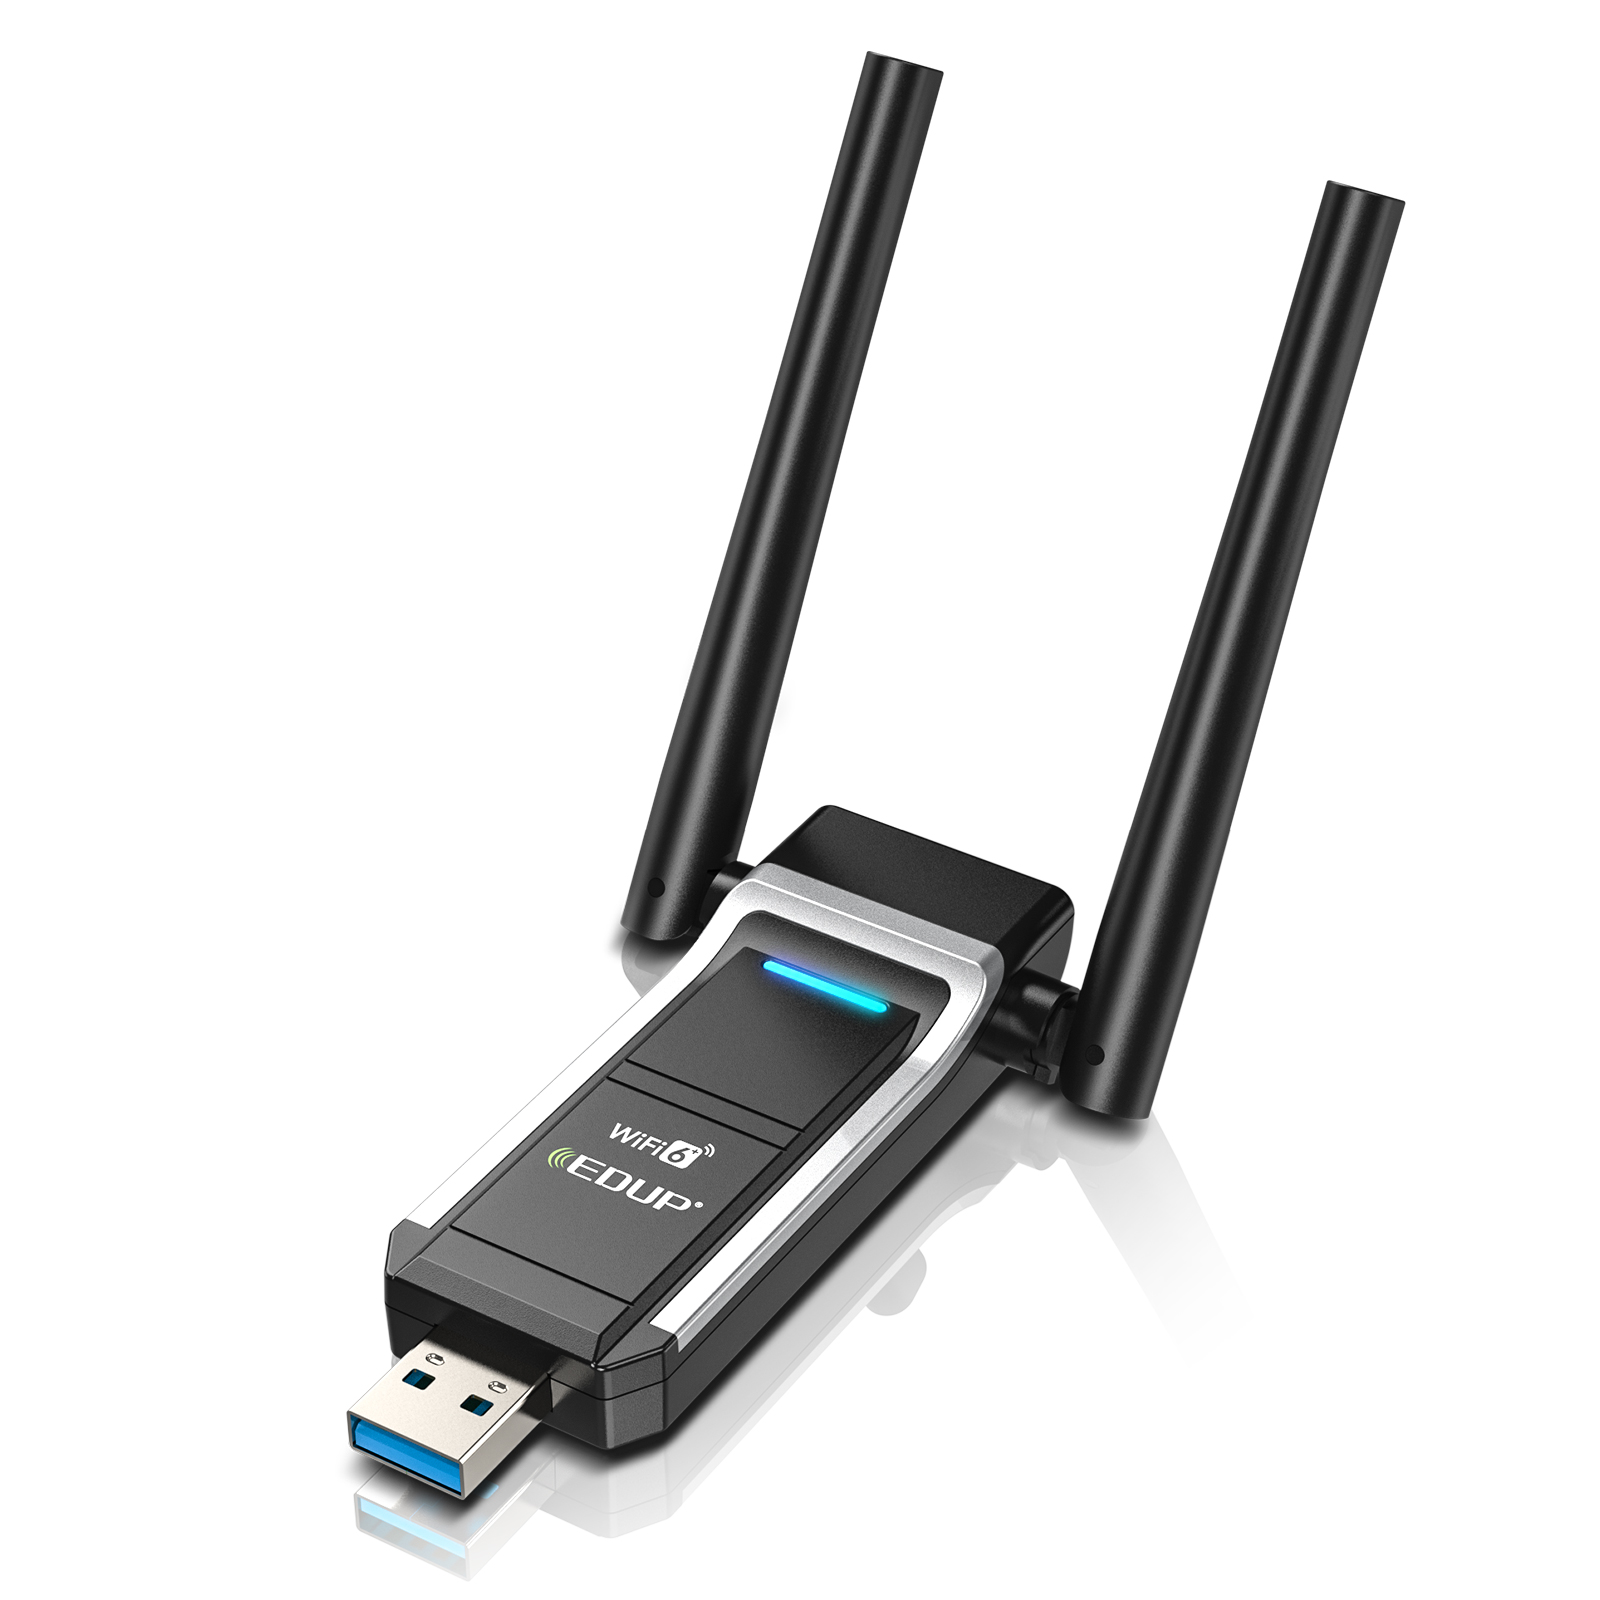 WiFi6E USB 3.0 WiFi Adapter for PC, AX5400M 802.11AX, Tri-Band